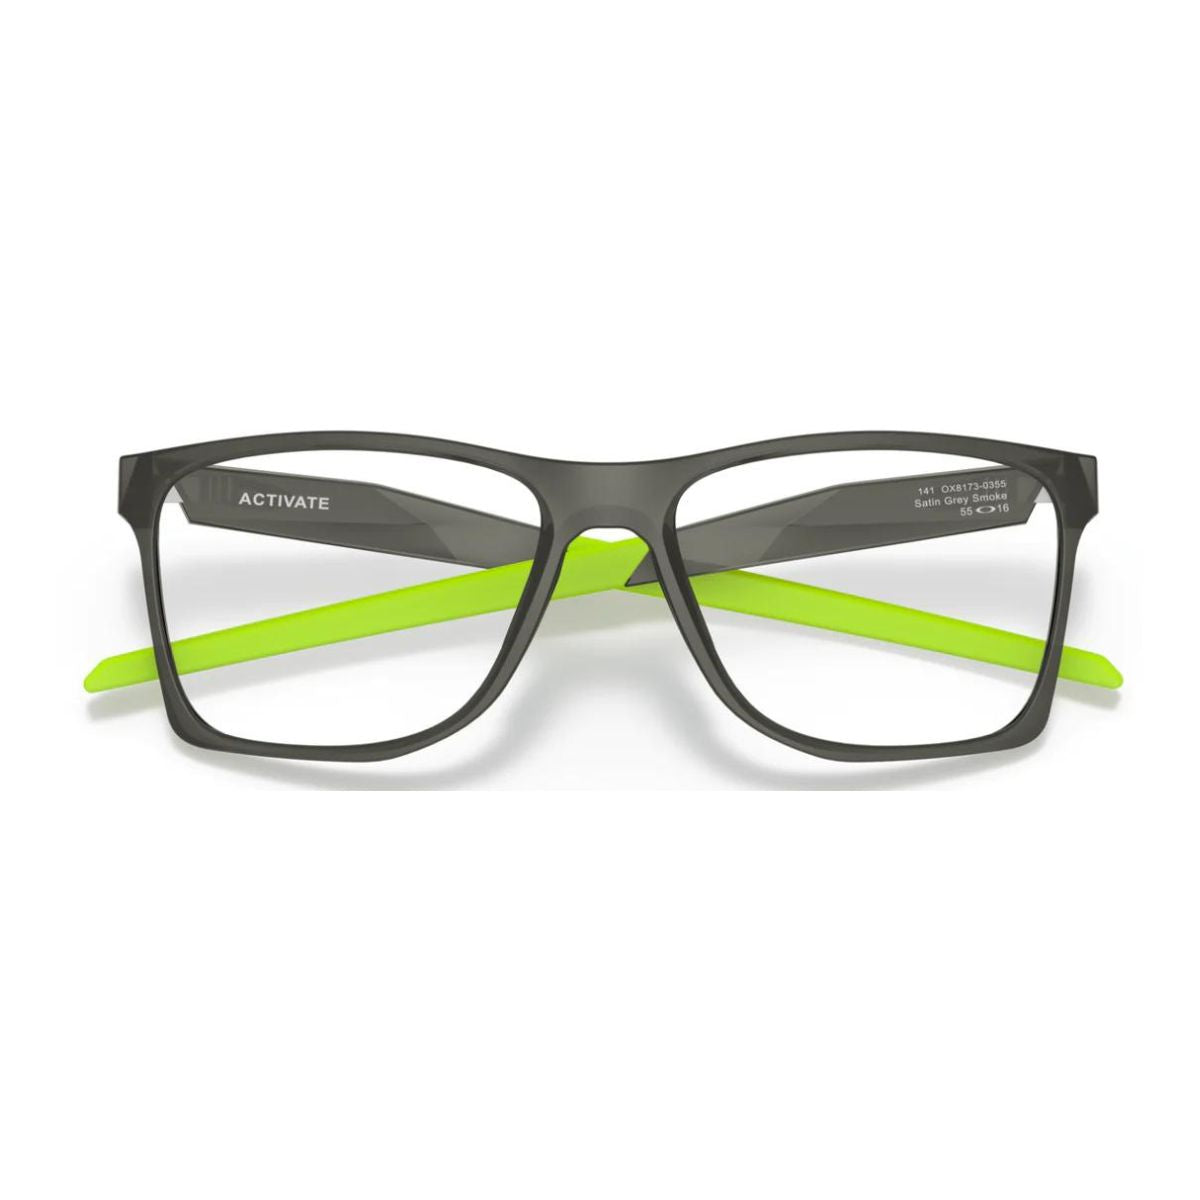 "best Oakley 8173 0353 optical eyewear glasses frame for men's at optorium"